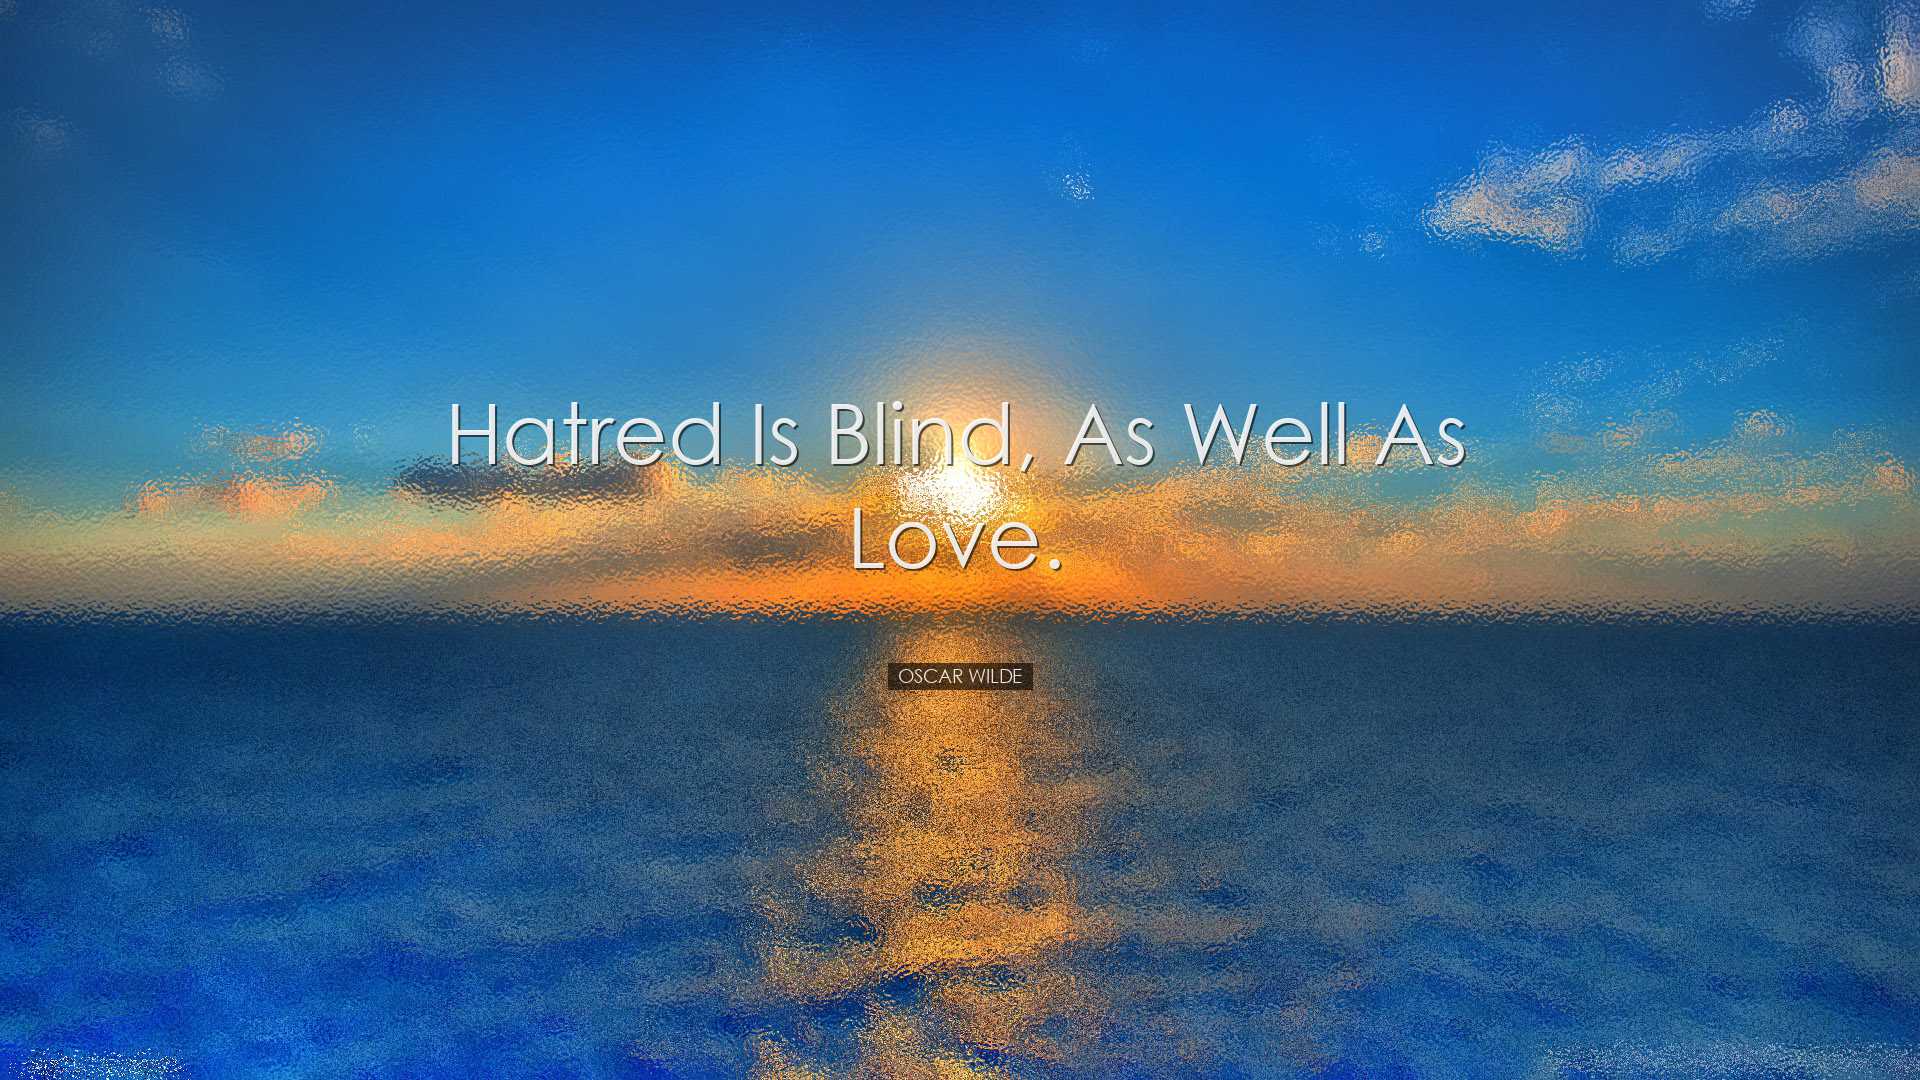 Hatred is blind, as well as love. - Oscar Wilde